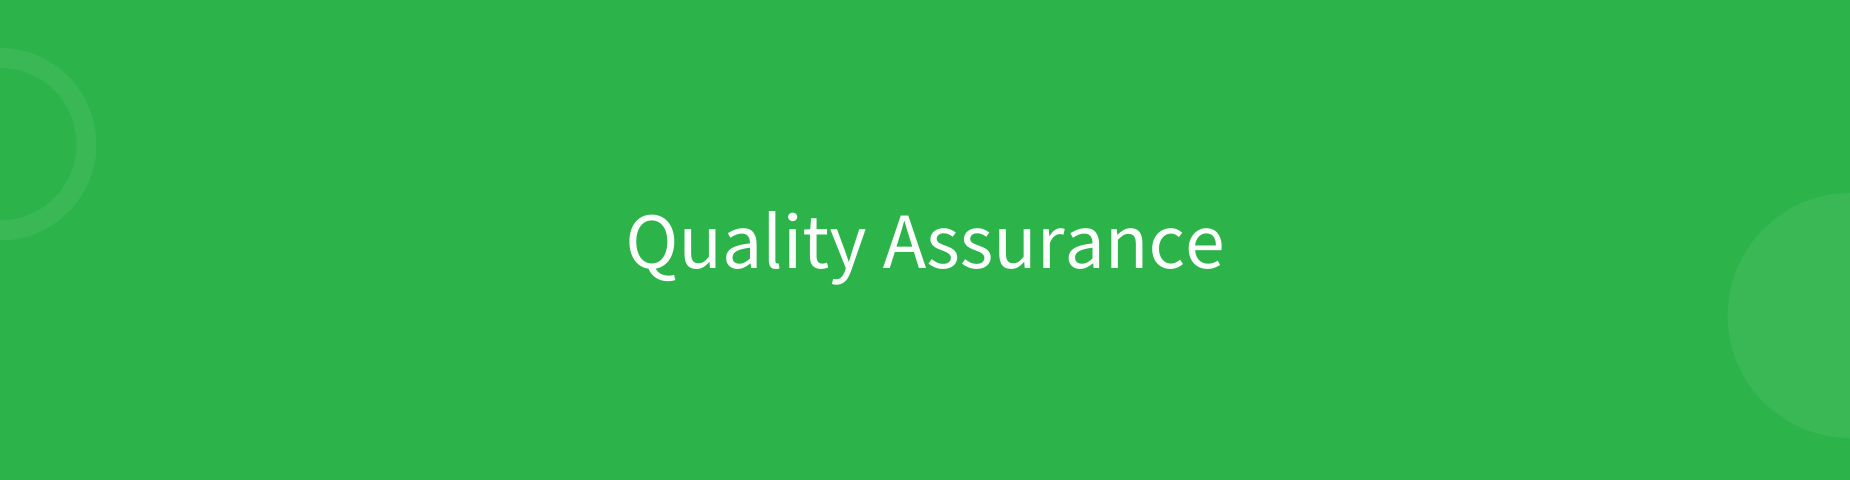 Quality Assurance Header English